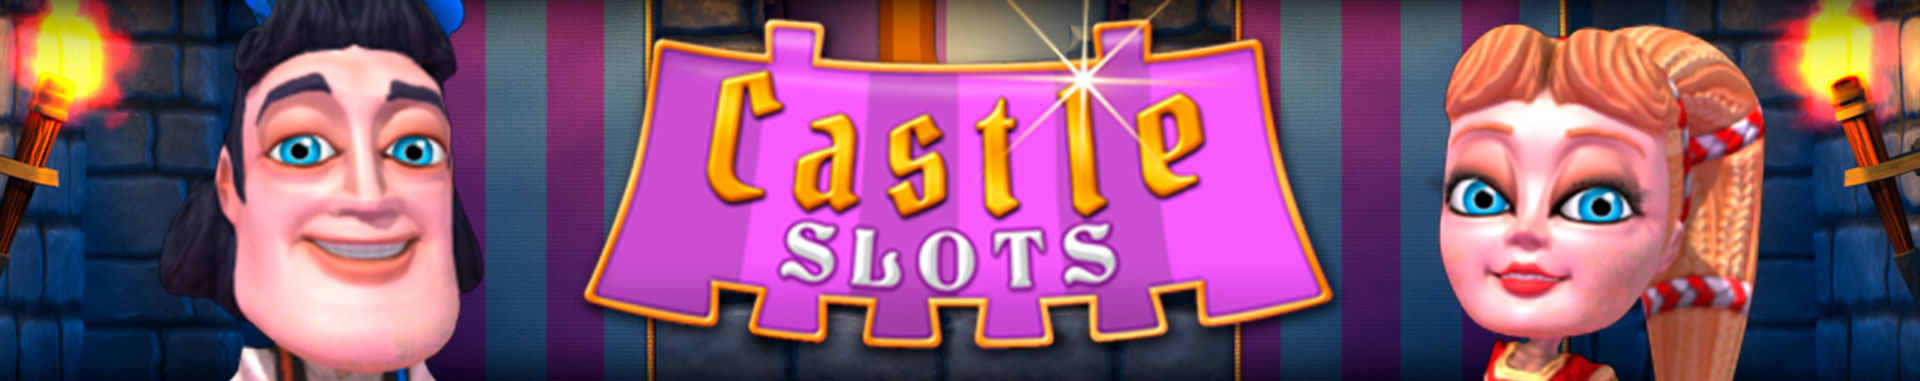 Tragaperras Online Castle Slots